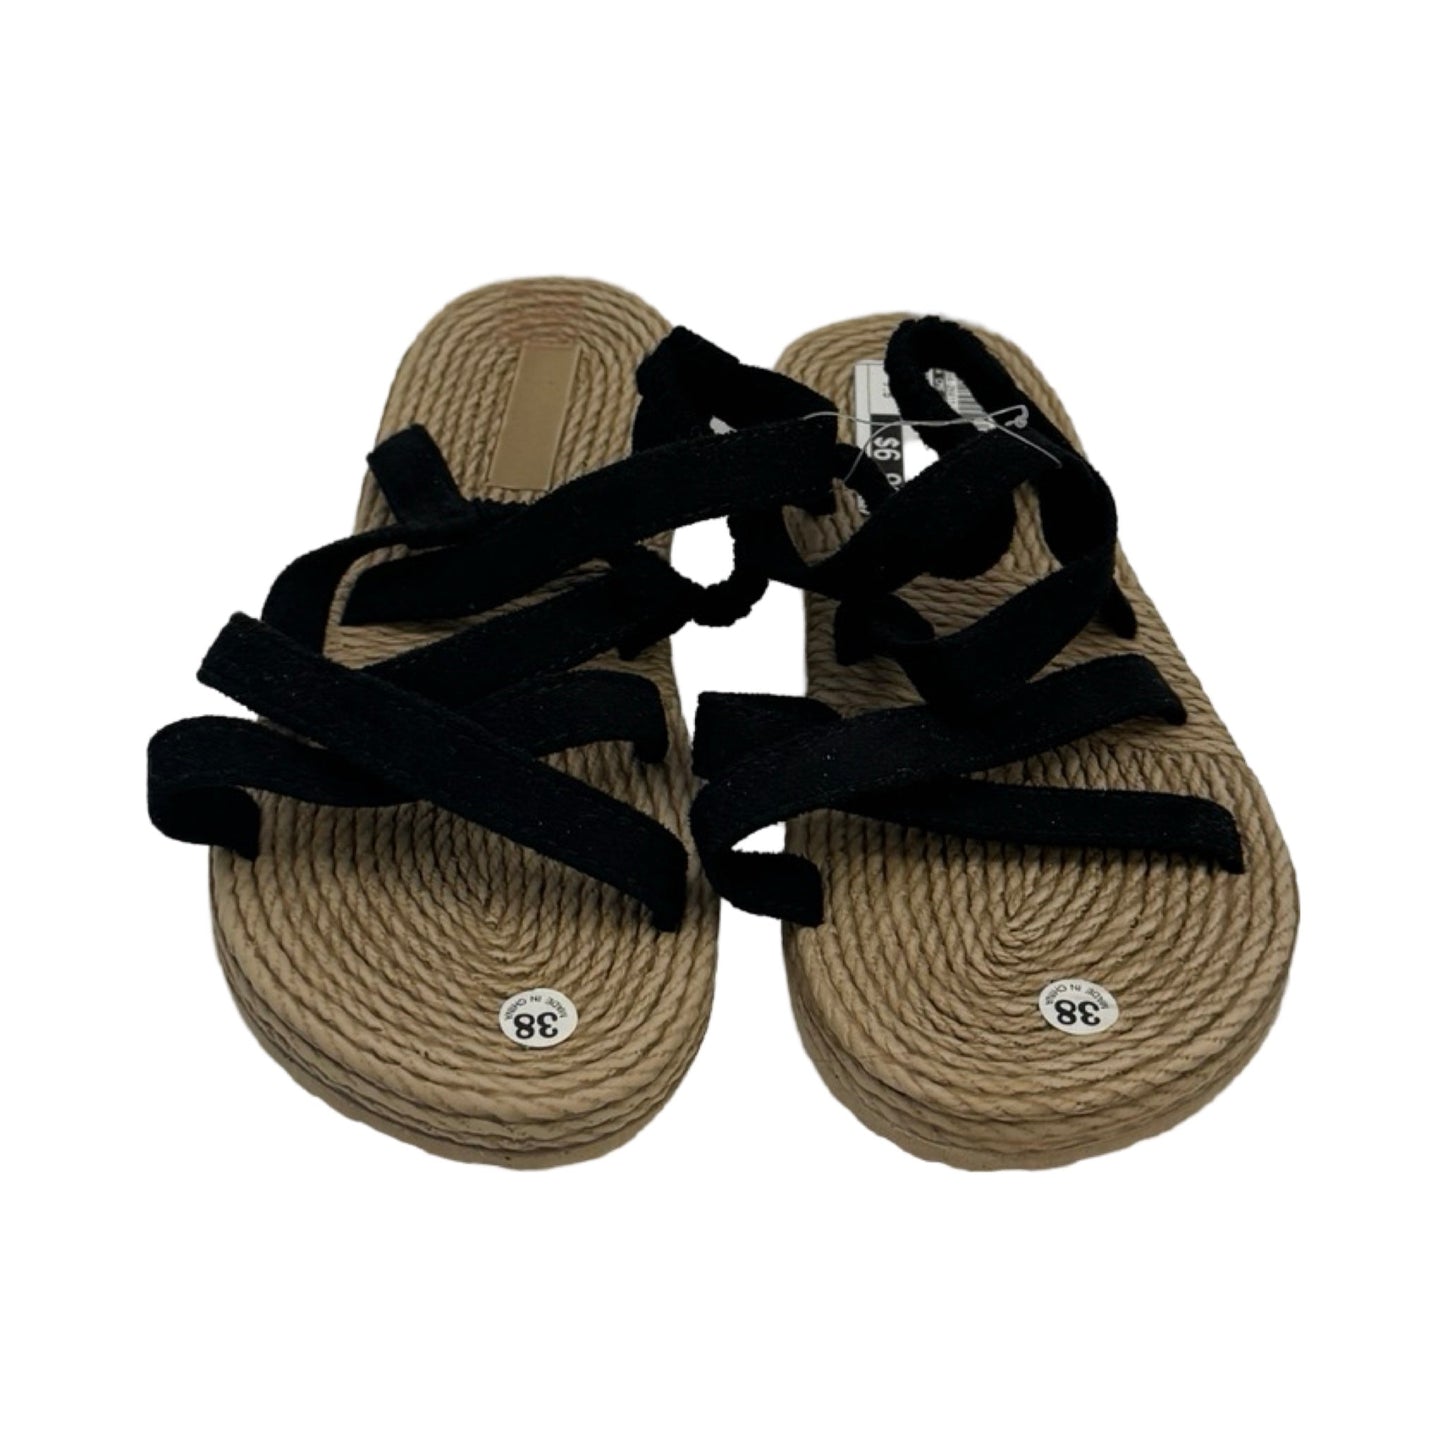 Sandals Flip Flops By Cmf  Size: 7.5